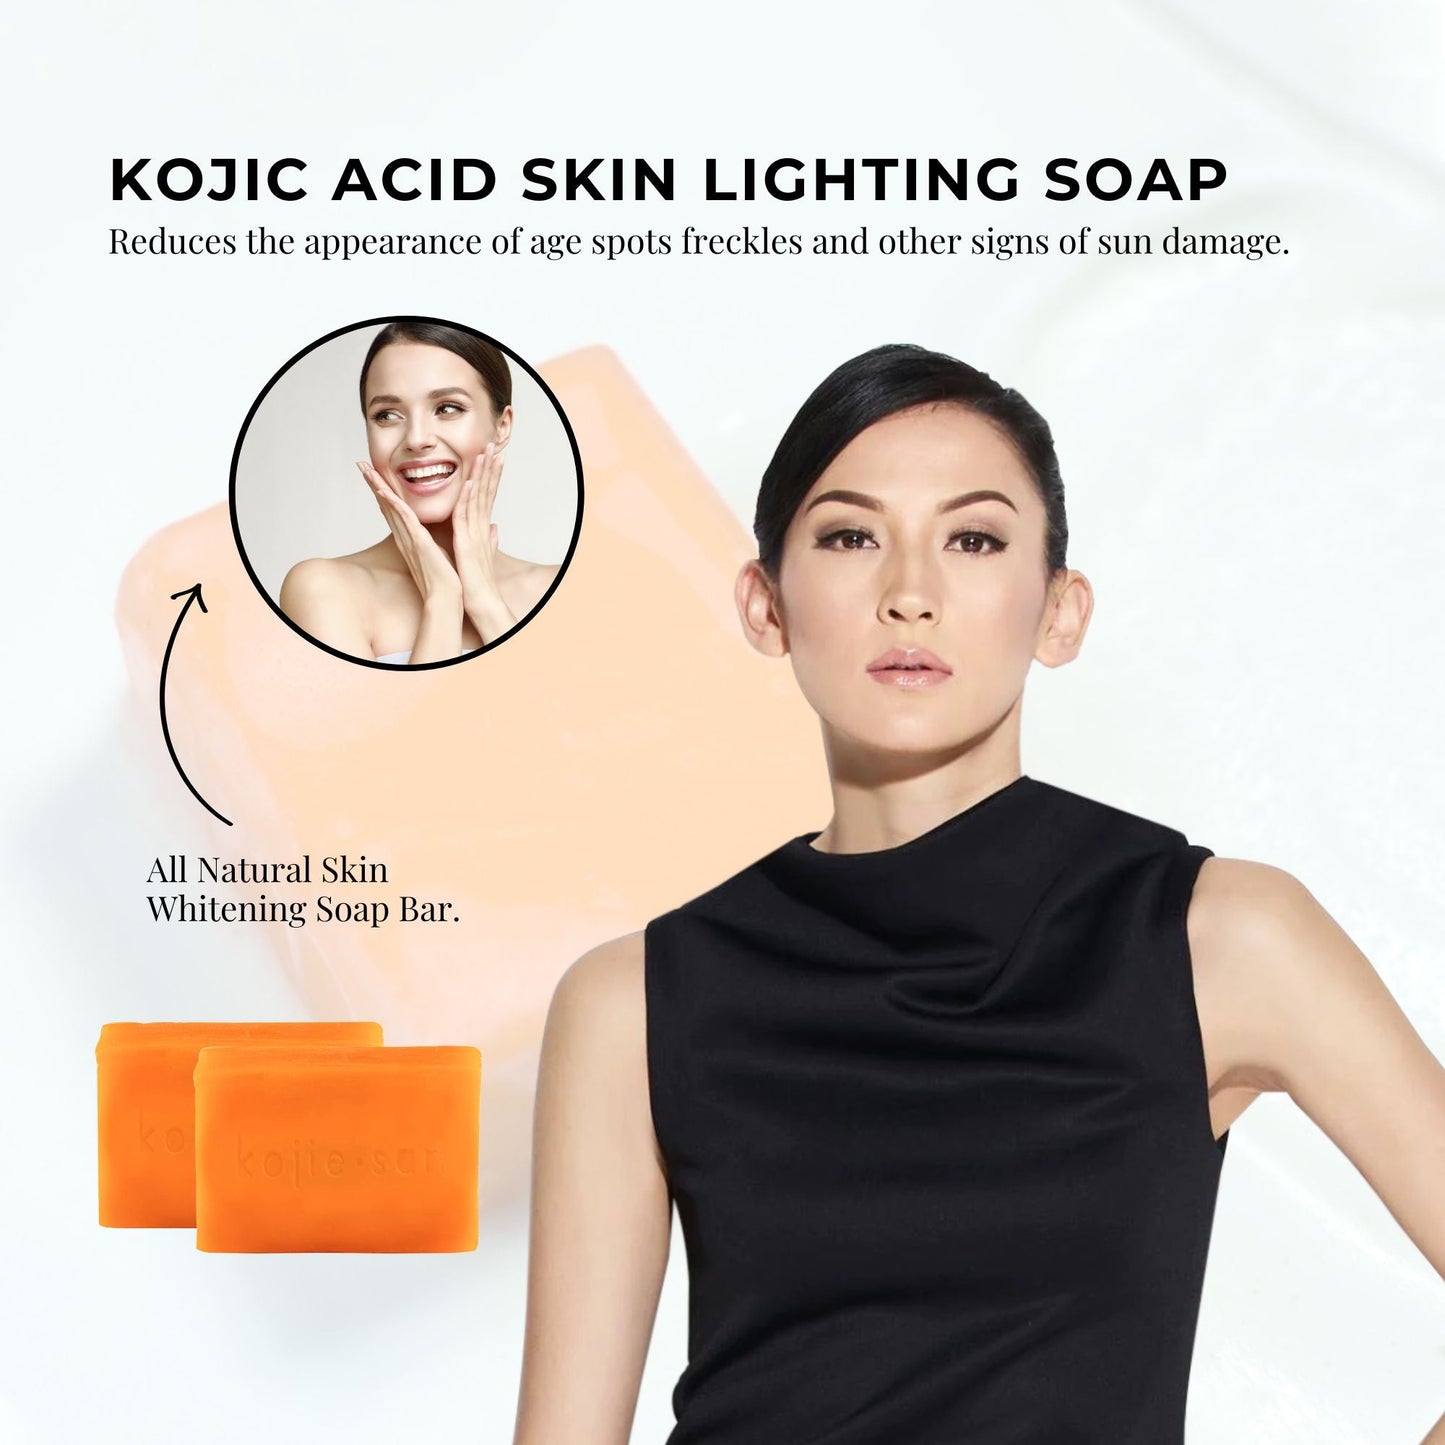 2x Kojie San Soap Bars - 135g Skin Lightening Kojic Acid Natural Original Bar